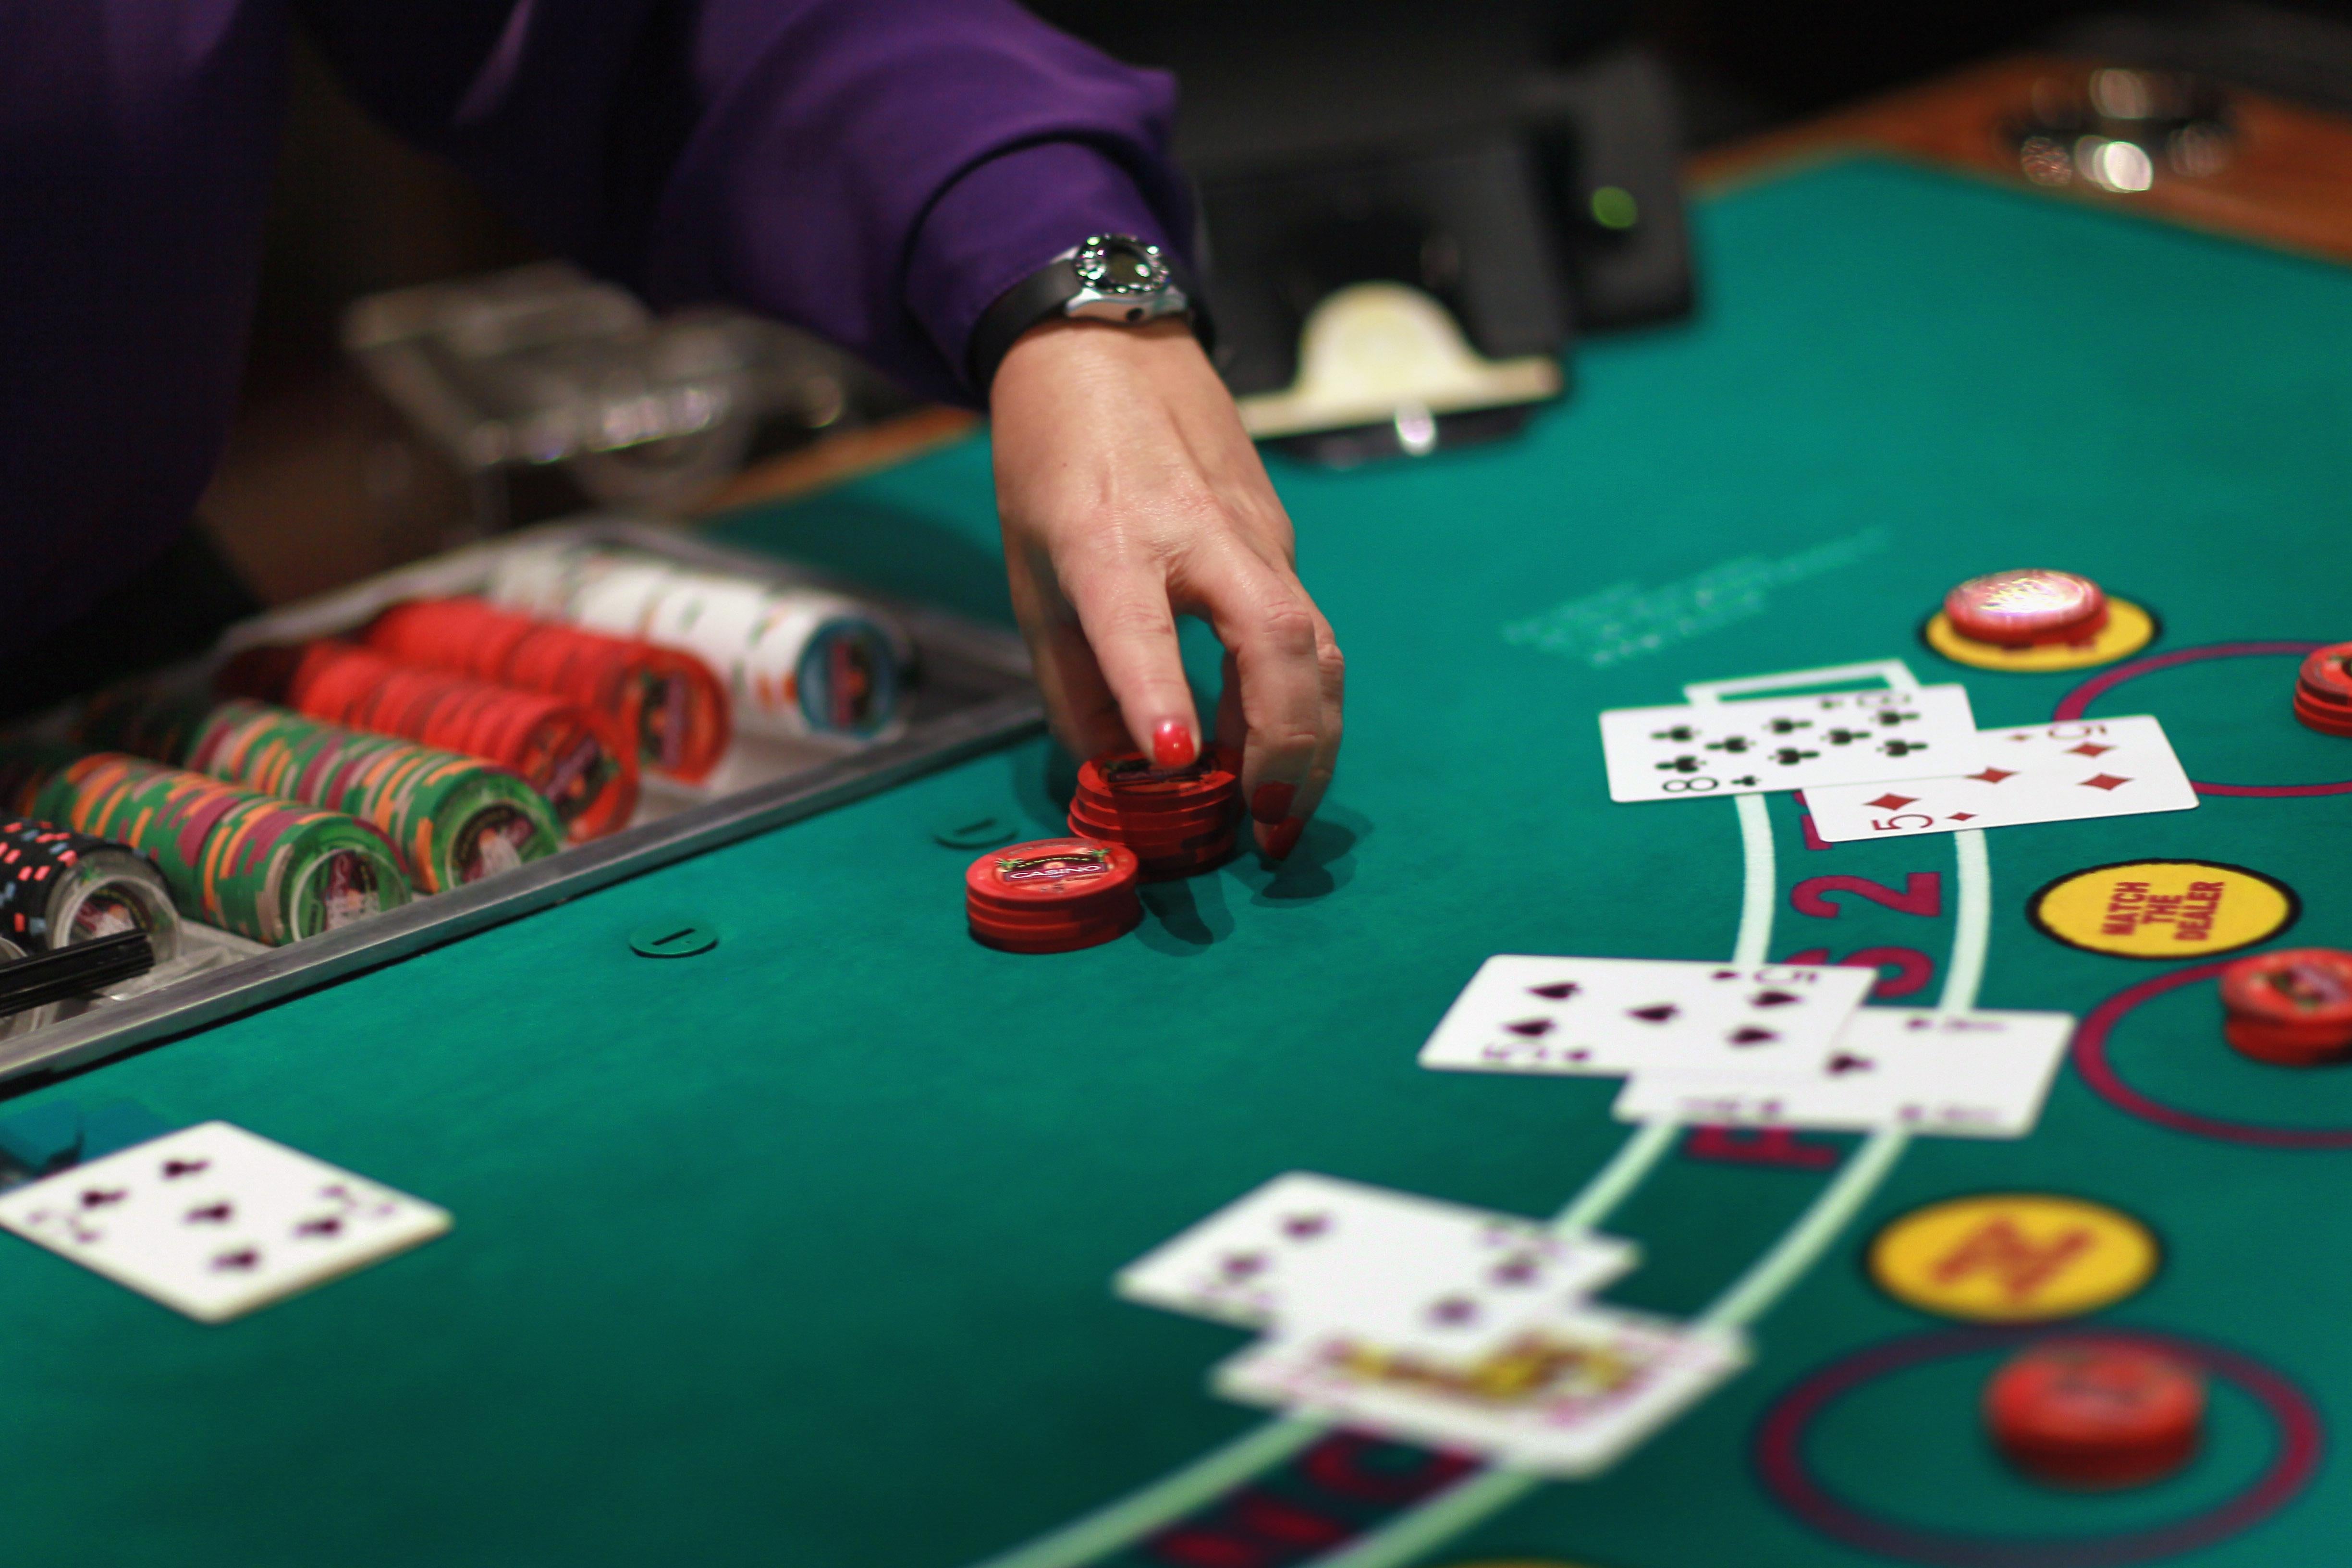 best gambling strategies for indian online casino